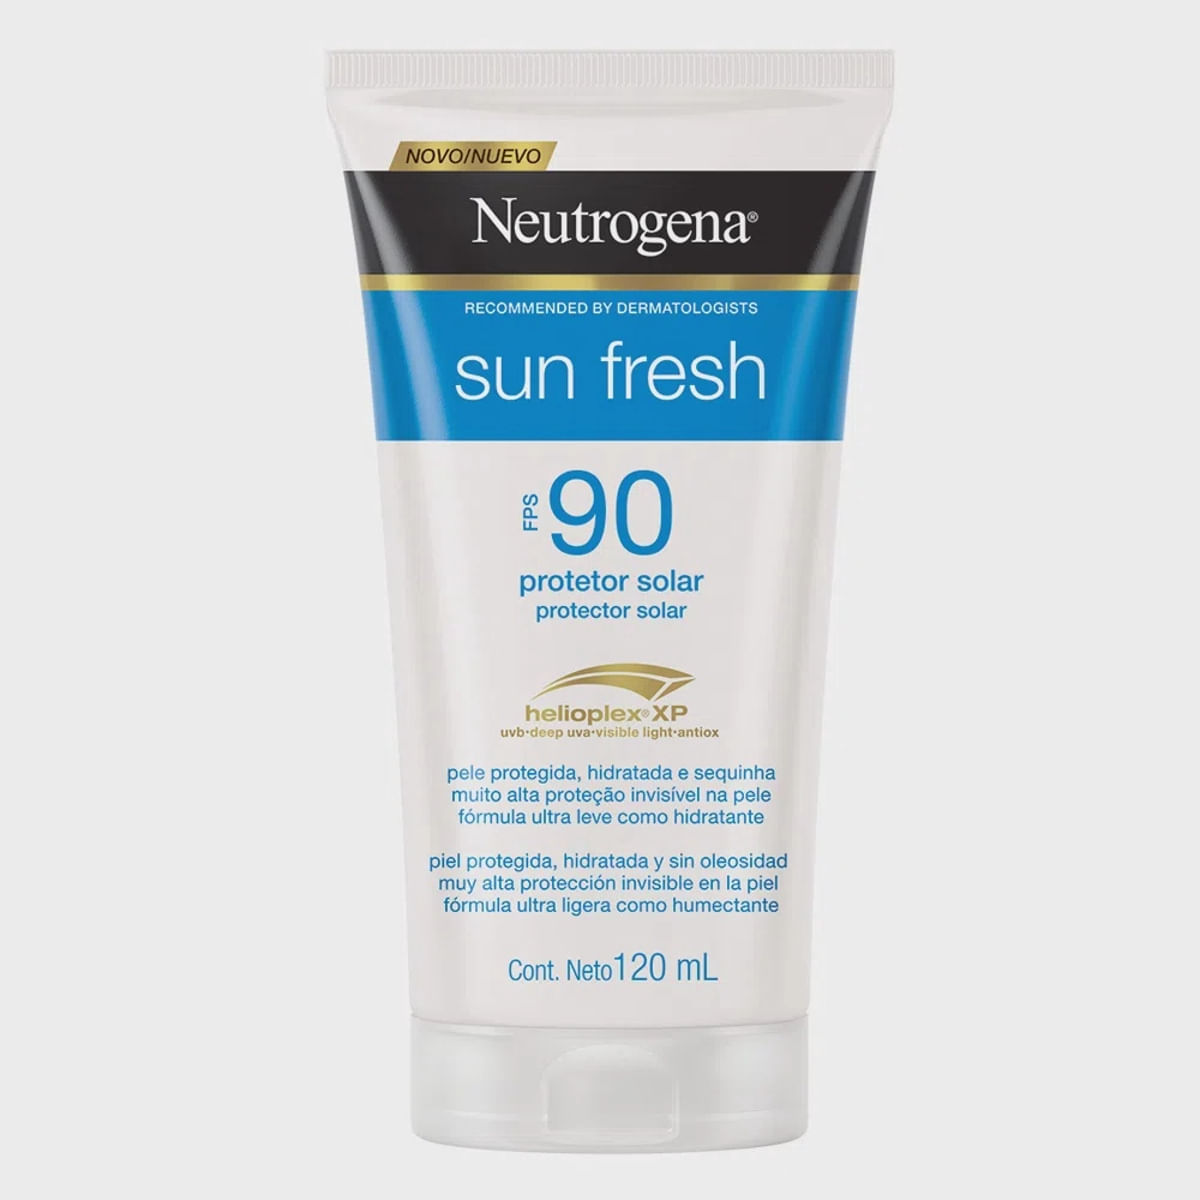 neutrogena-sun-fresh-fps90-120ml-1.jpg